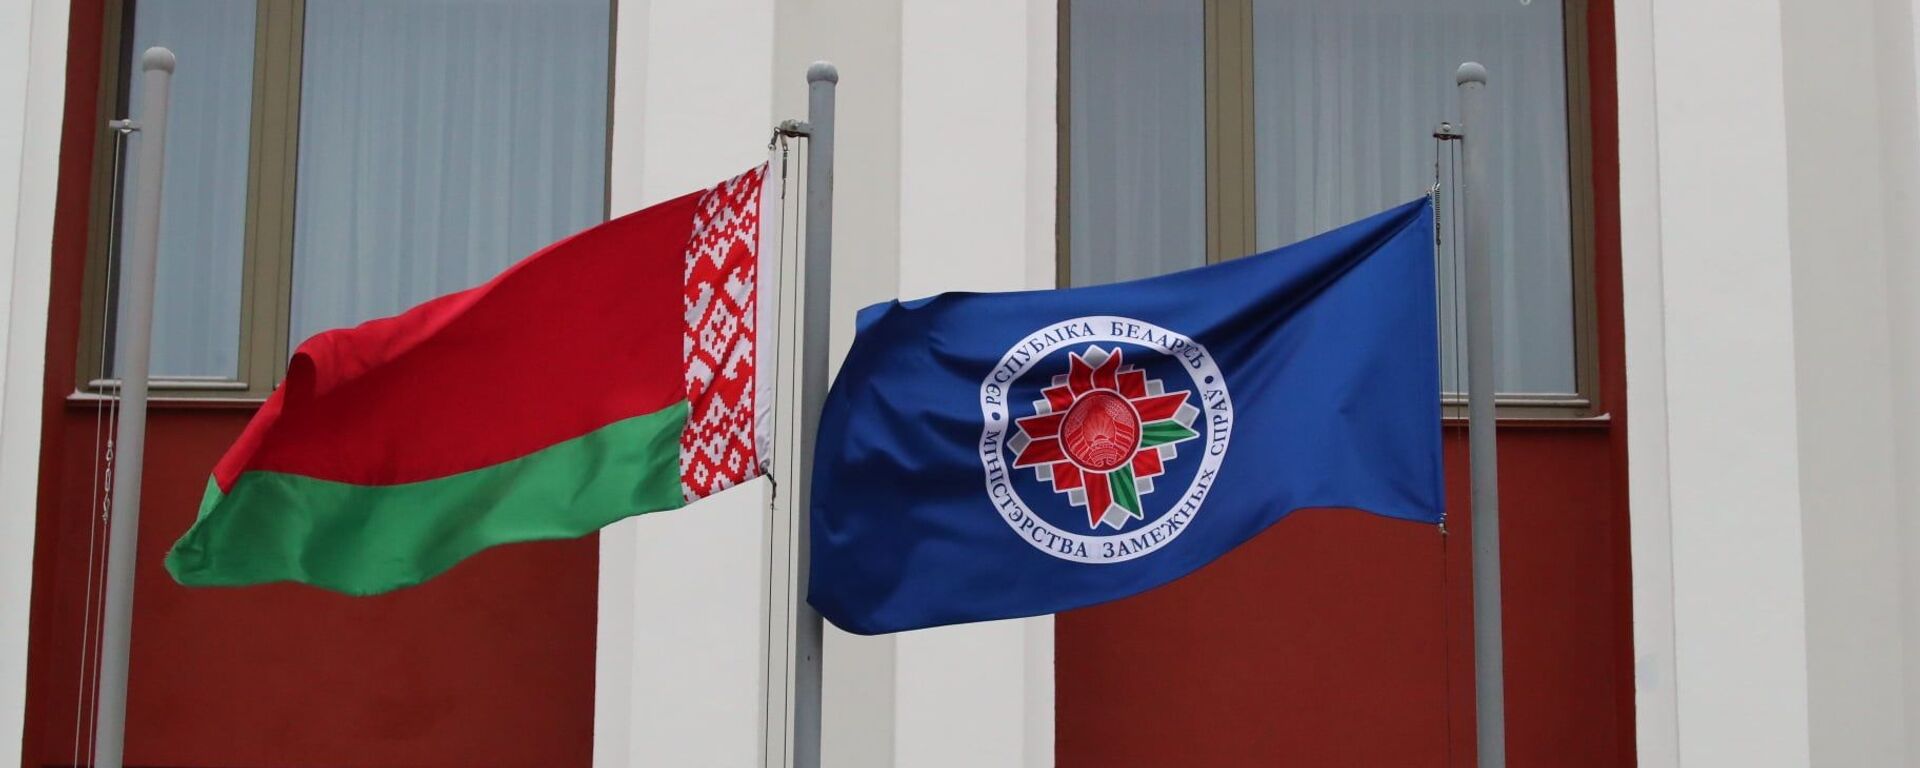 Флаги у здания МИД в Минске - Sputnik Грузия, 1920, 28.06.2021